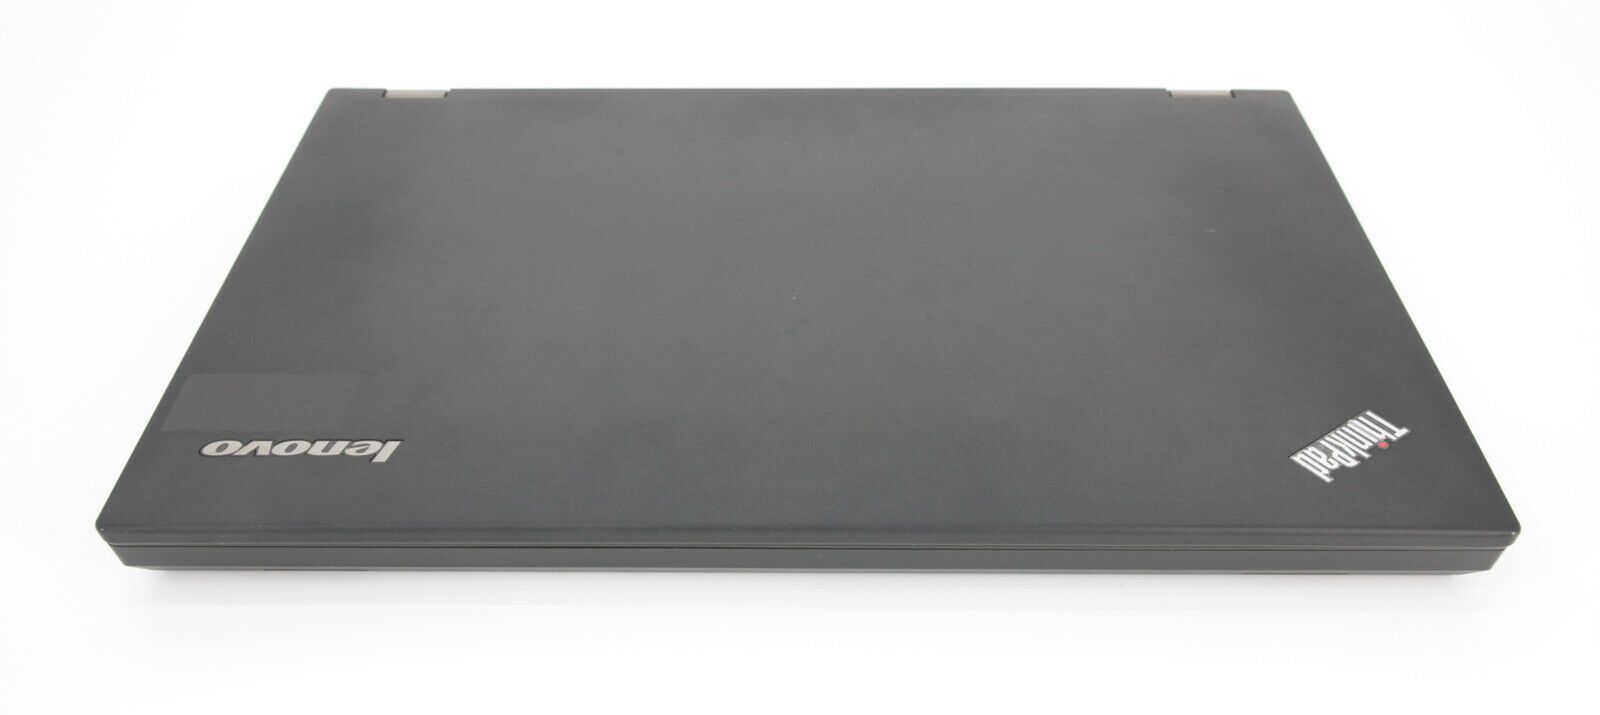 Lenovo ThinkPad T540P Laptop: 4th Gen i7, 480GB SSD, NVIDIA 730M VAT - CruiseTech